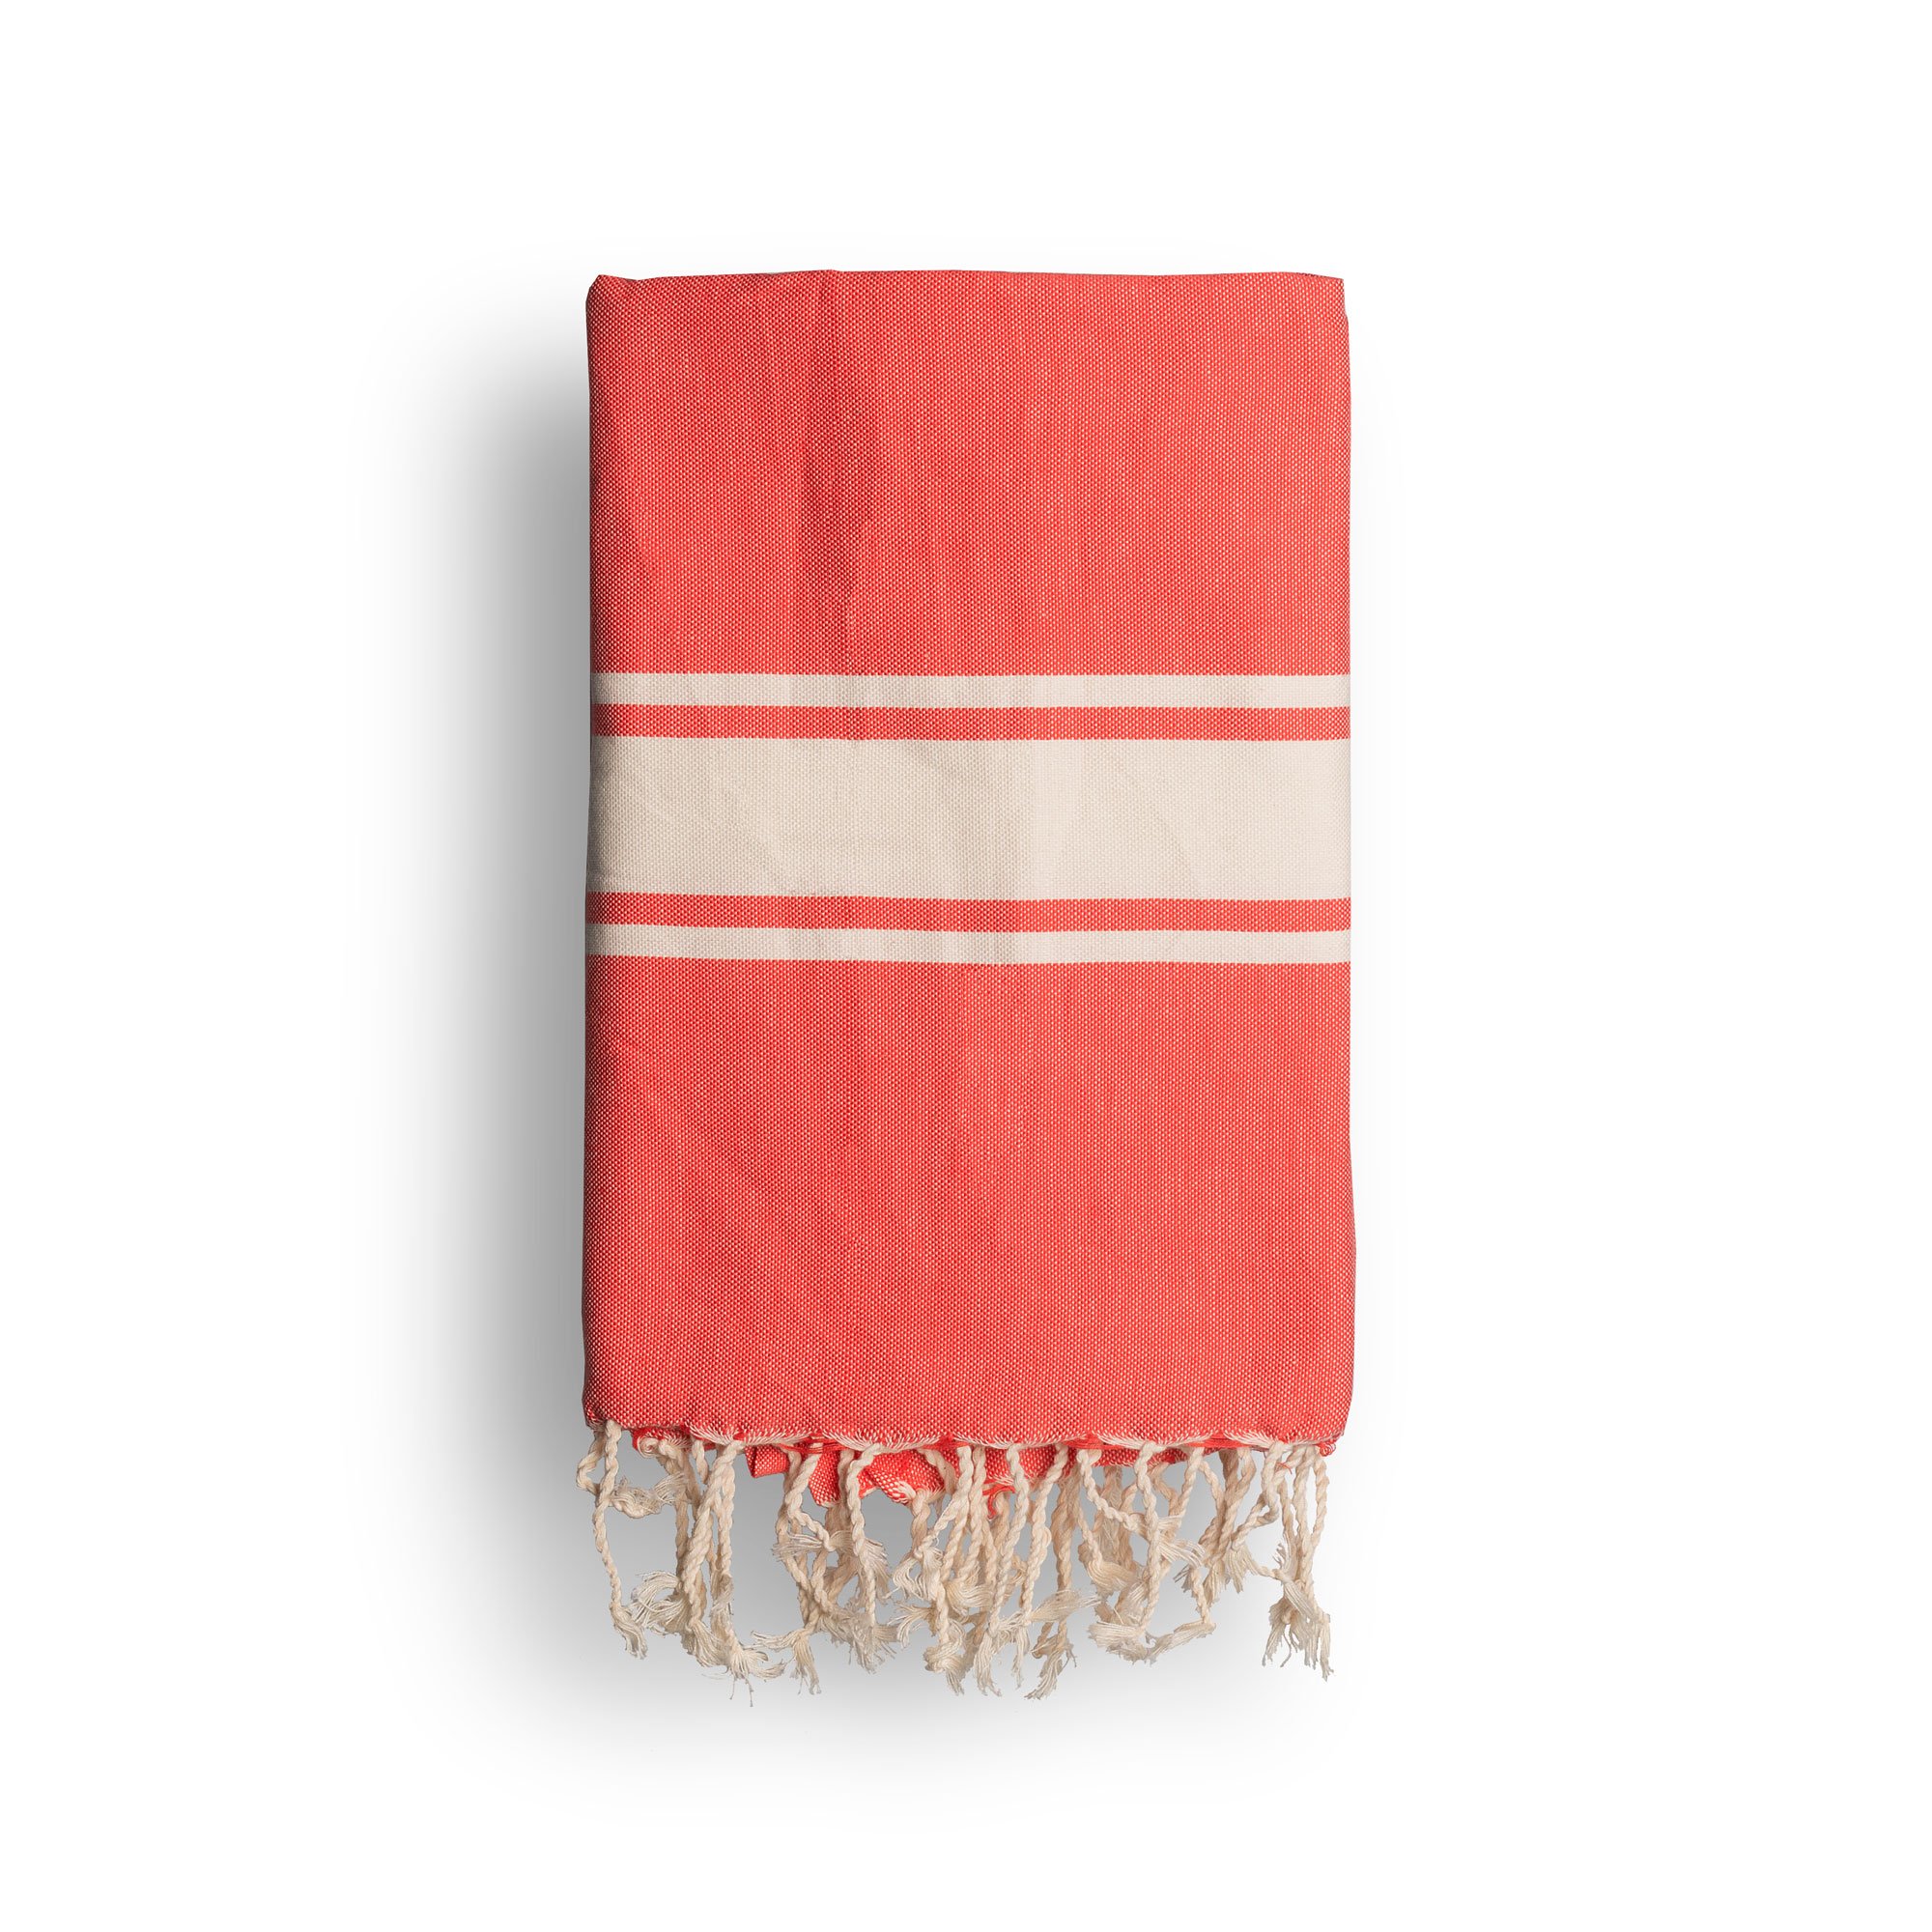 Cool-Fouta Hammam Towel Coral Classic Fouta